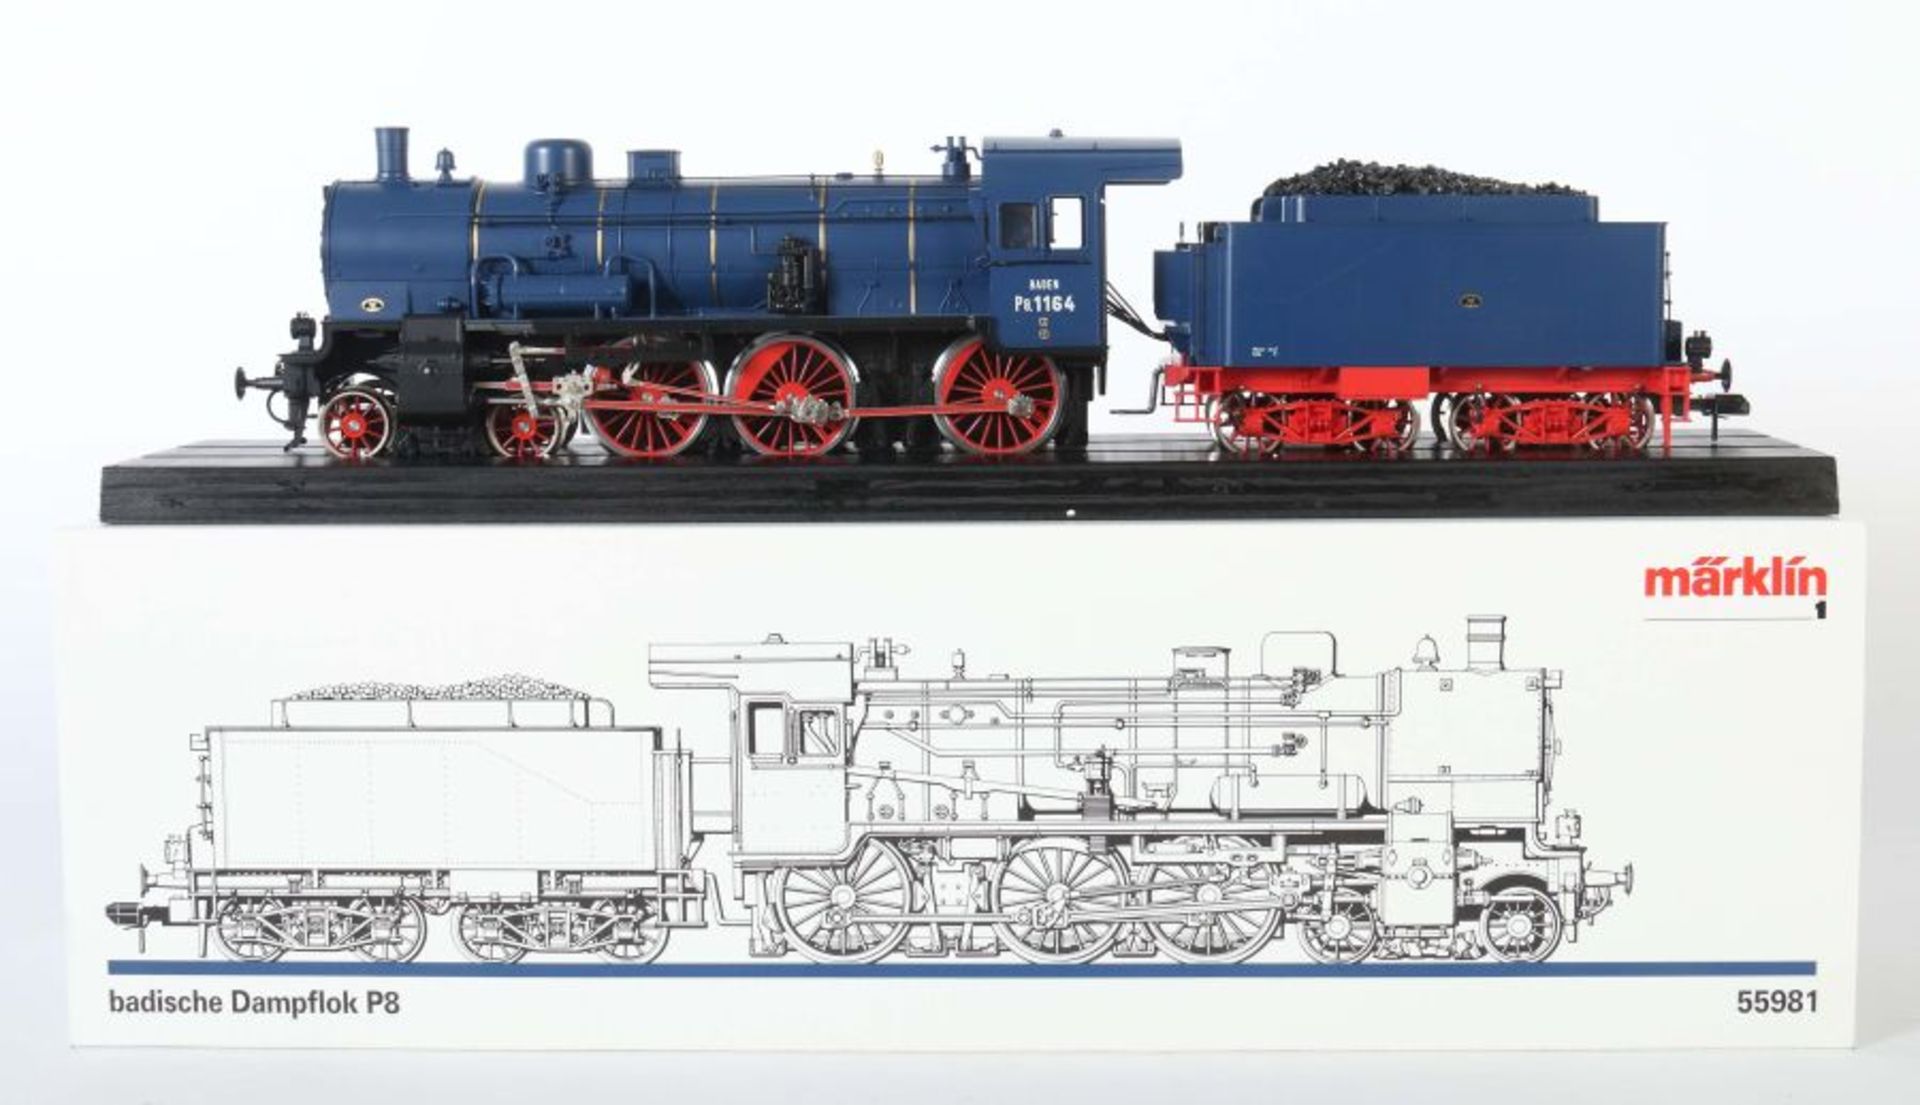 Badische Dampflok P8 Märklin, Modellnr. 55981, Spur 1, Replika, 3-5/-achsige Lokomotive mit 4- - Bild 2 aus 2